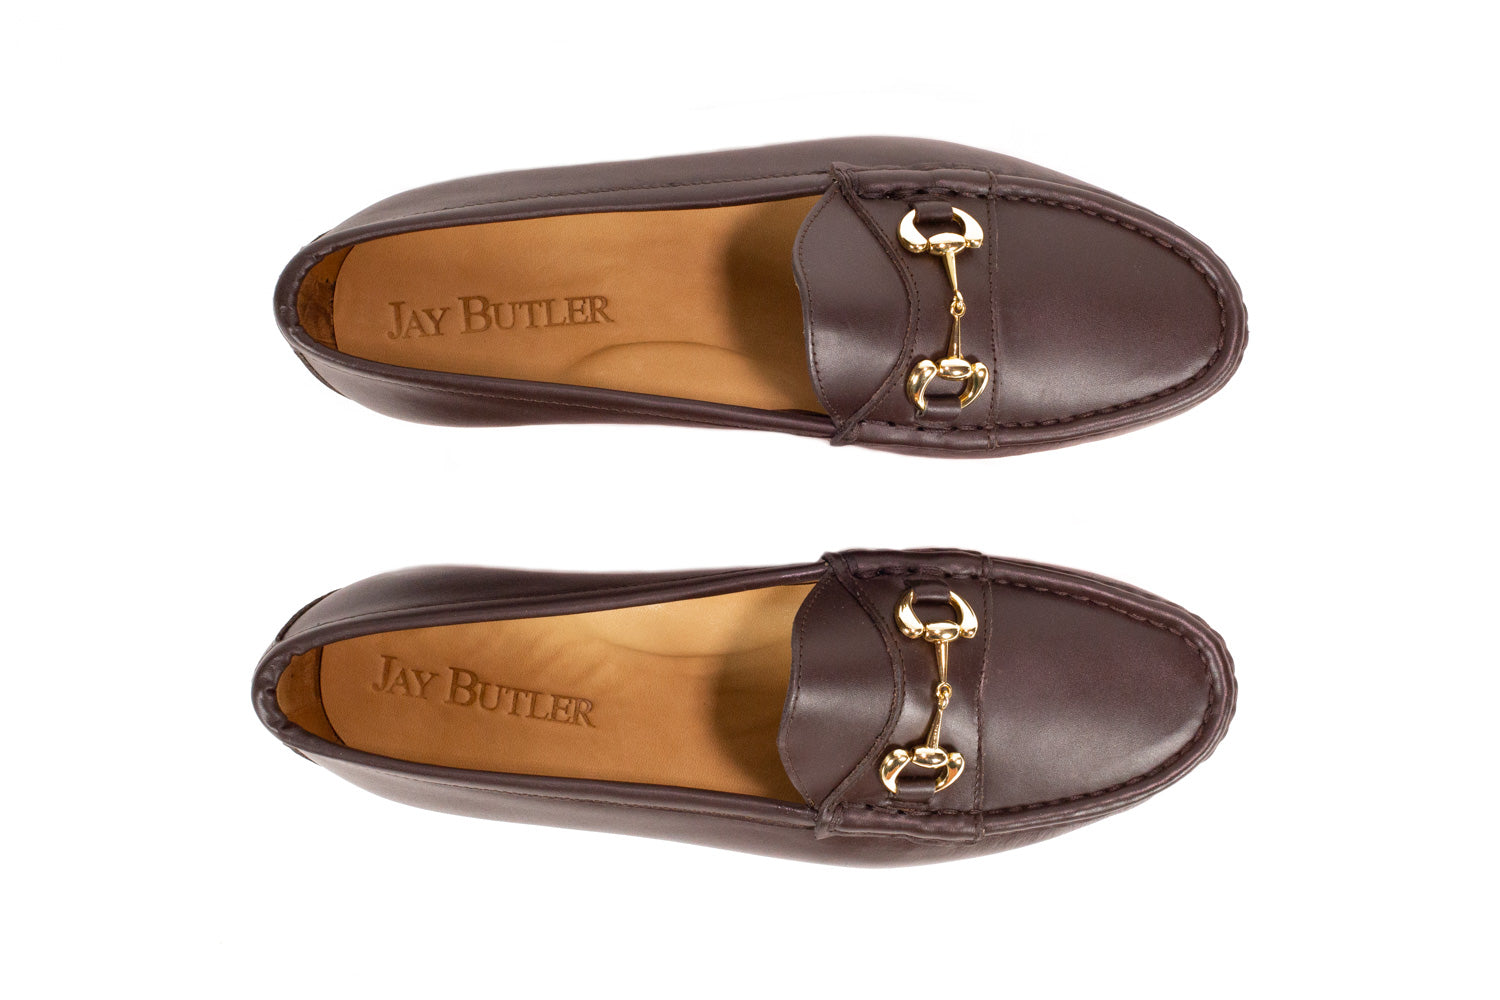 Men's Brown Loafers - Hockerty